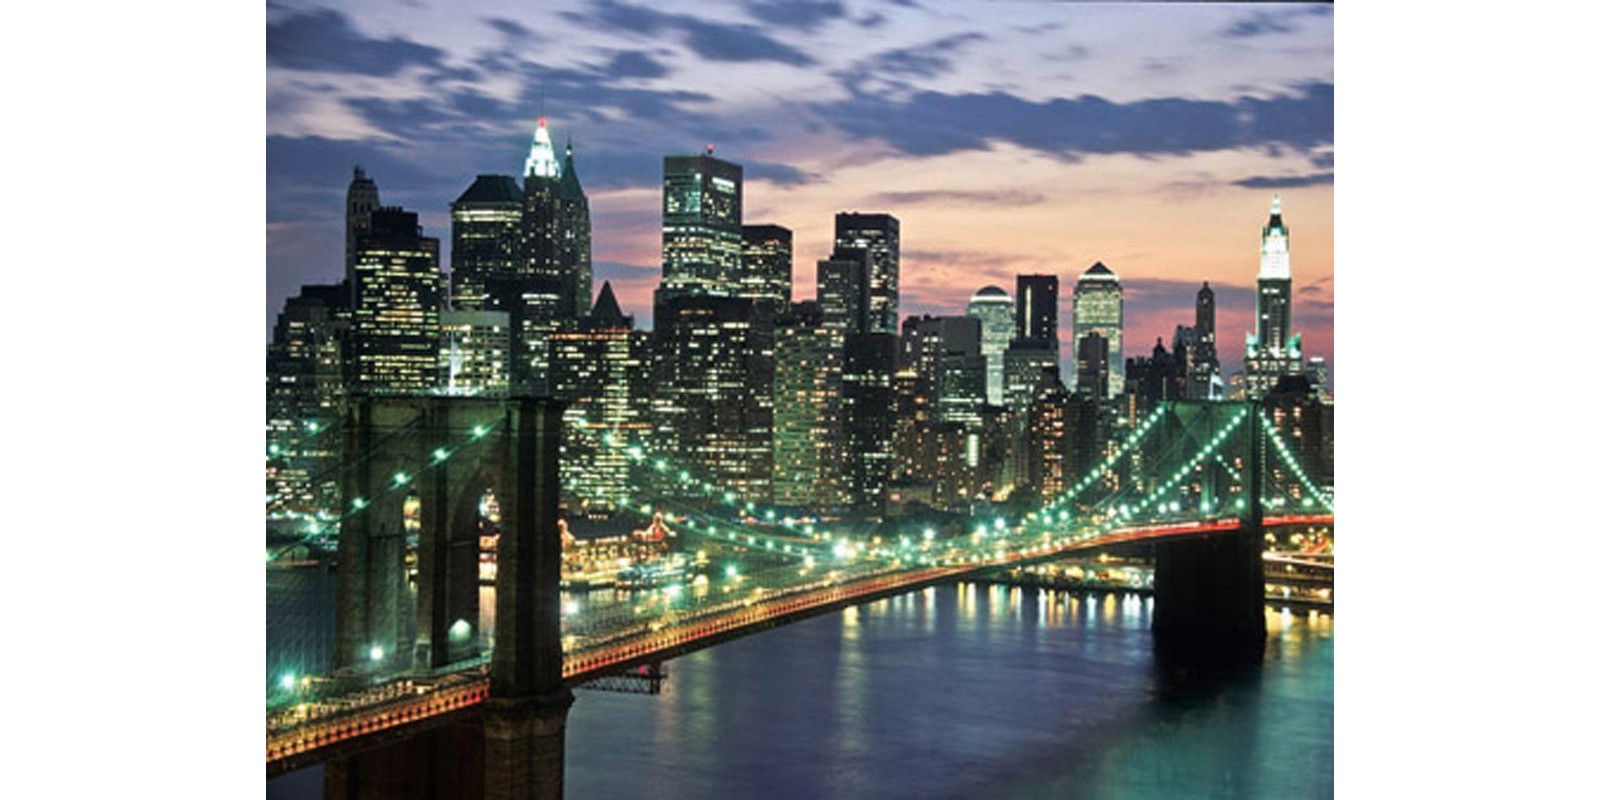 Michel Setboun - Brookyn bridge and Downtown skyline, NYC